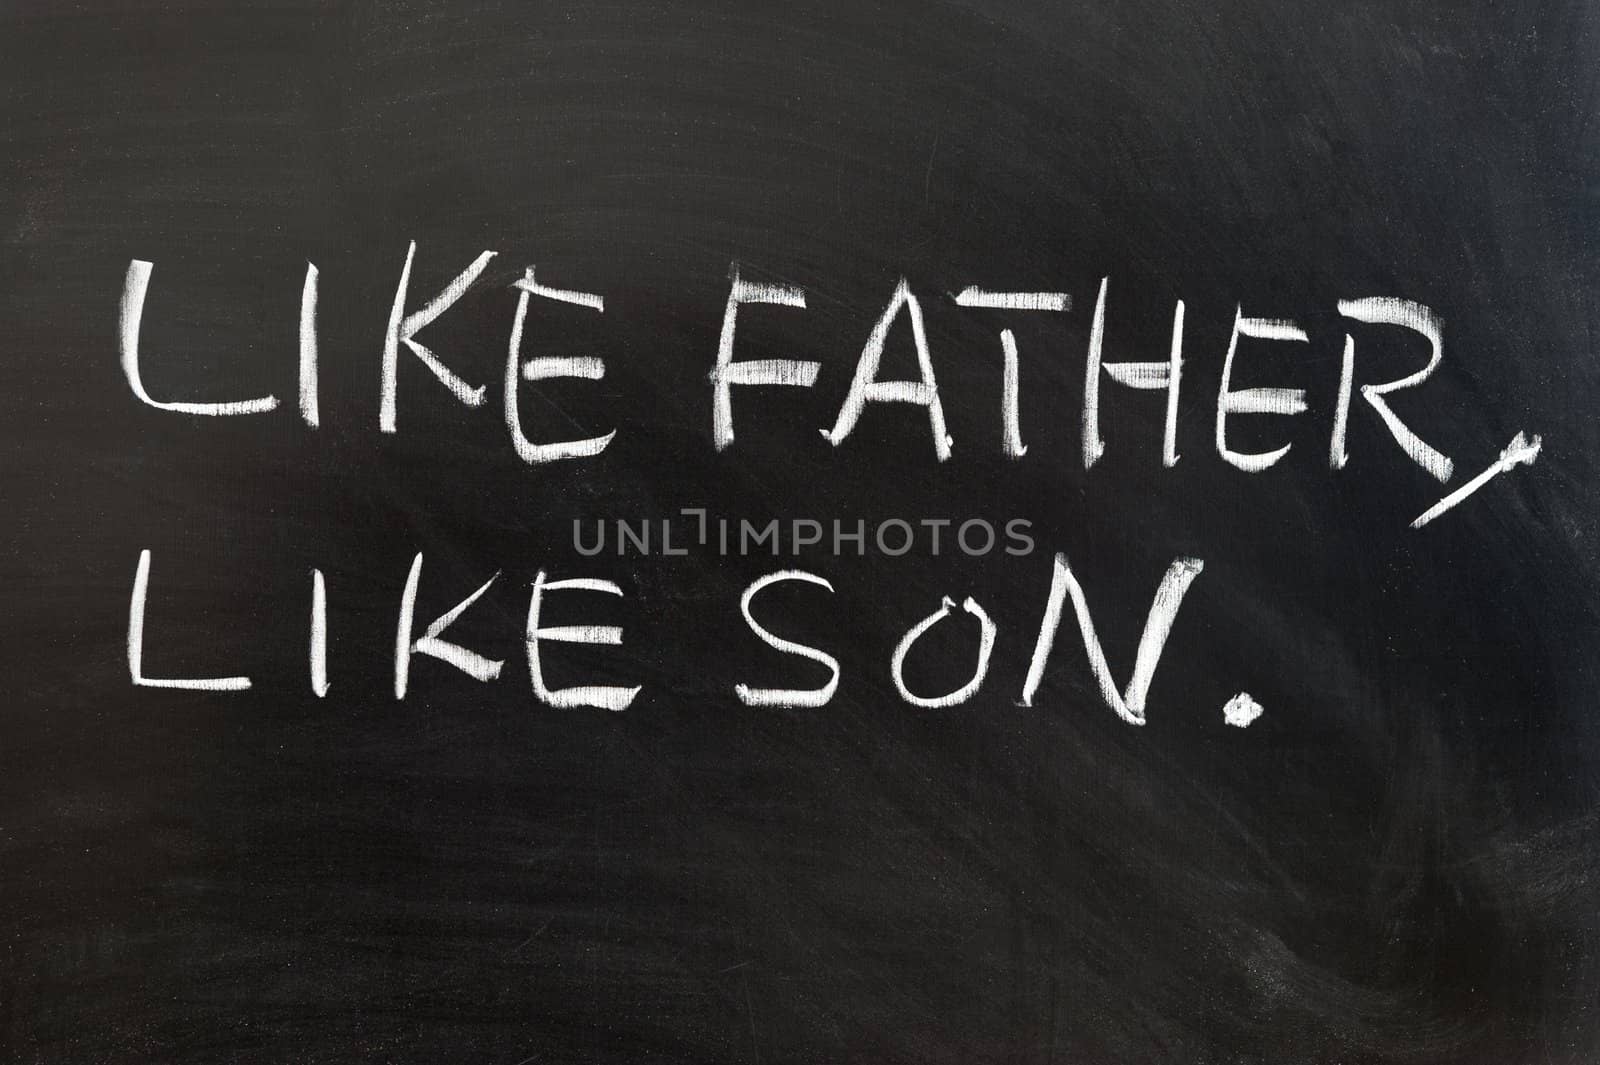 Saying of "Like father, like son" written on the blackboard